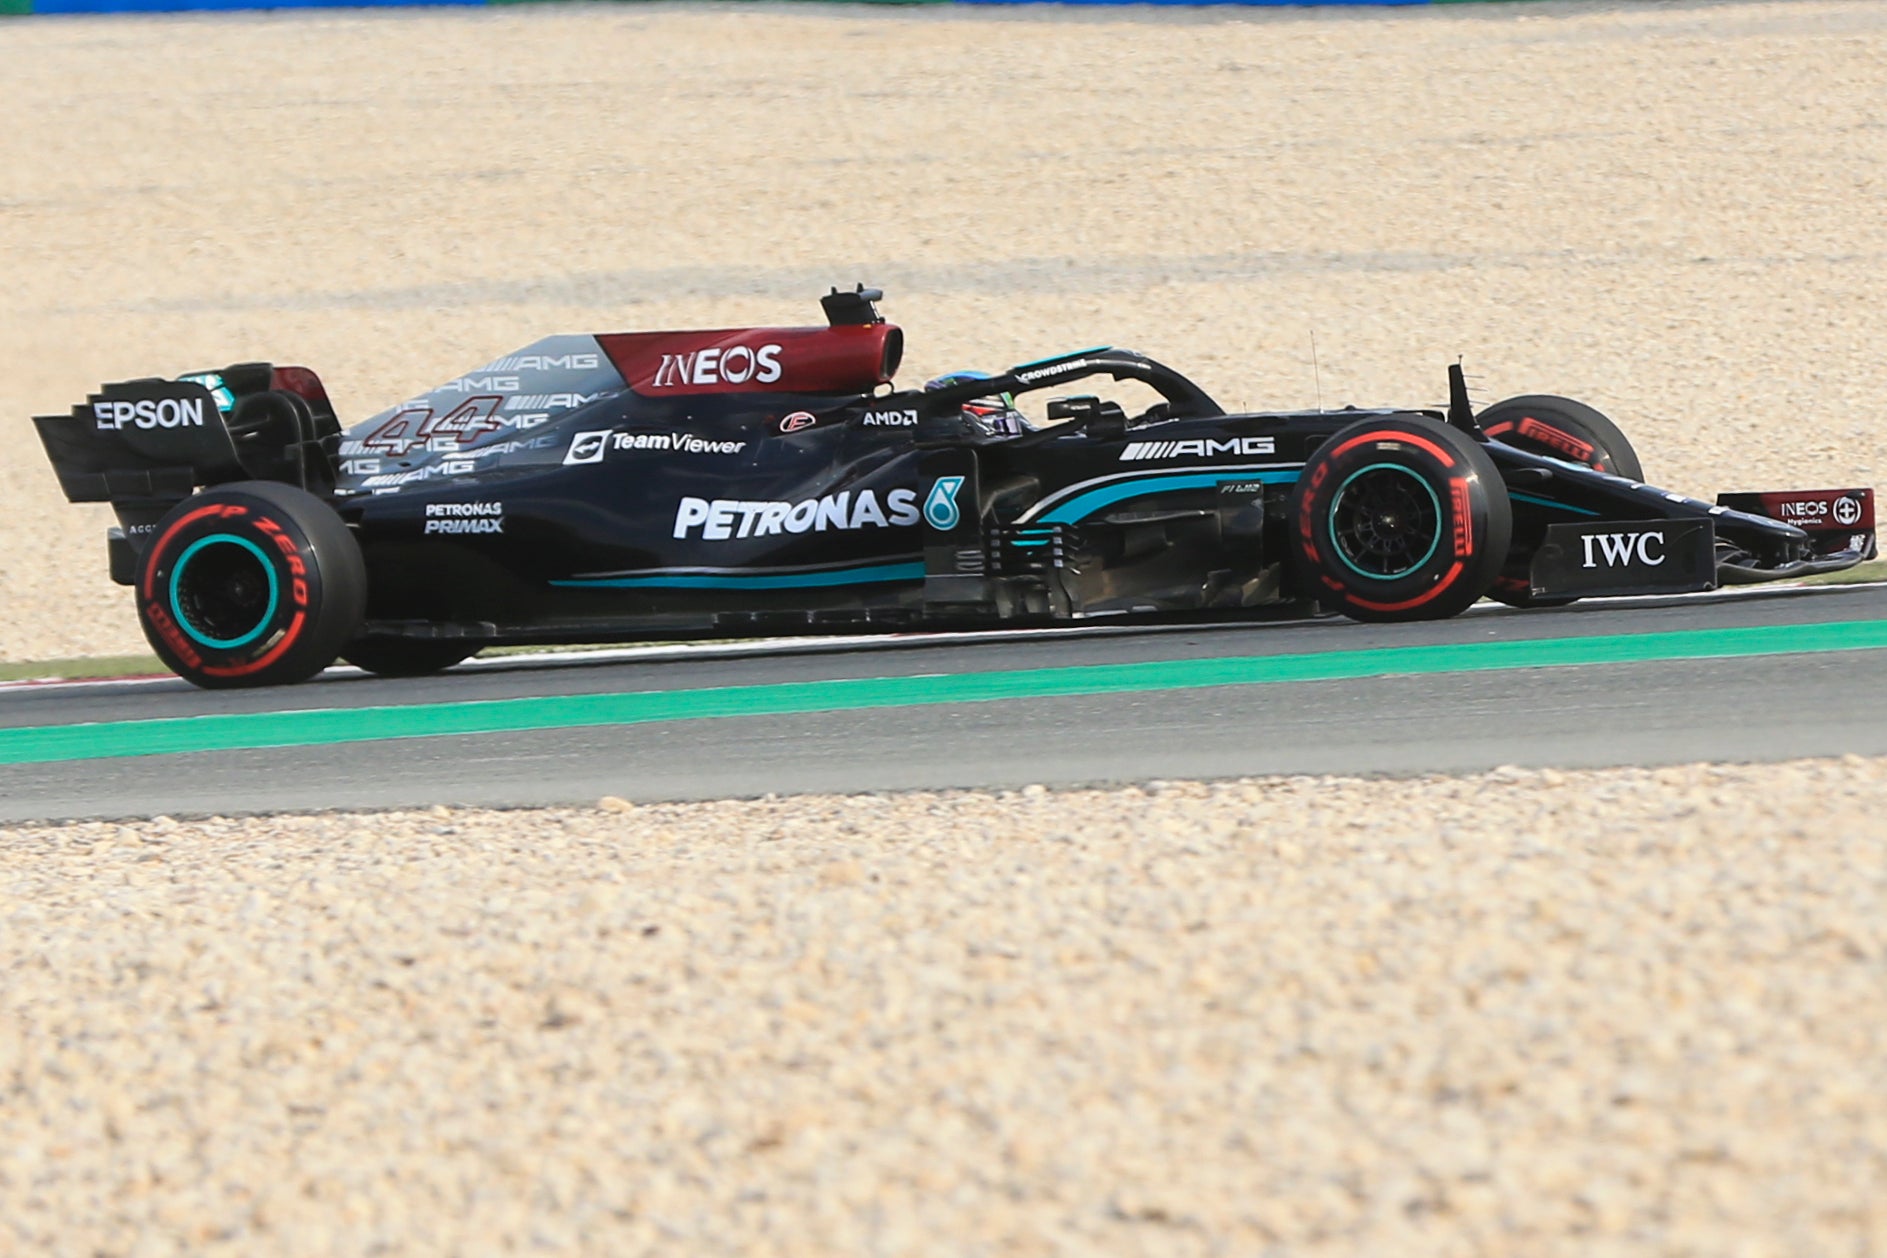 Mercedes driver Valtteri Bottas struggled in the race in Qatar